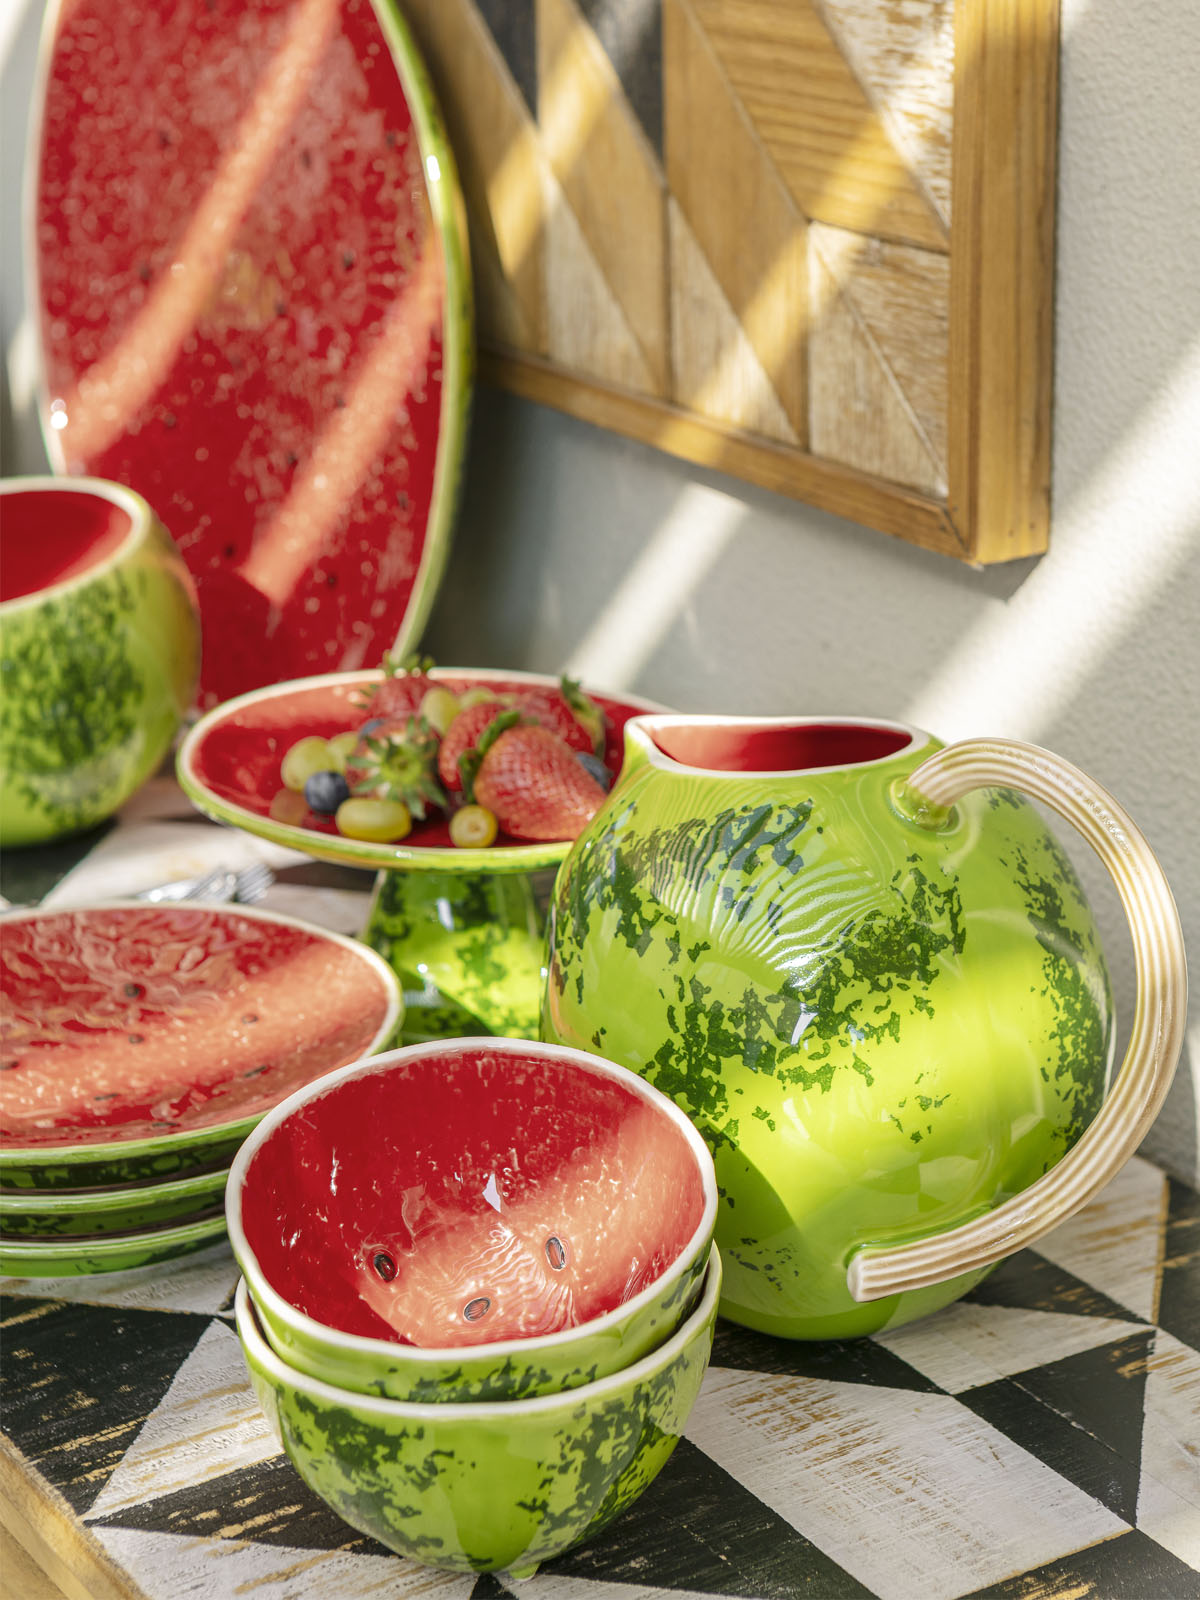 Bordallo Pinheiro Melancia Set mit 4 Wassermelonen-Obsttellern